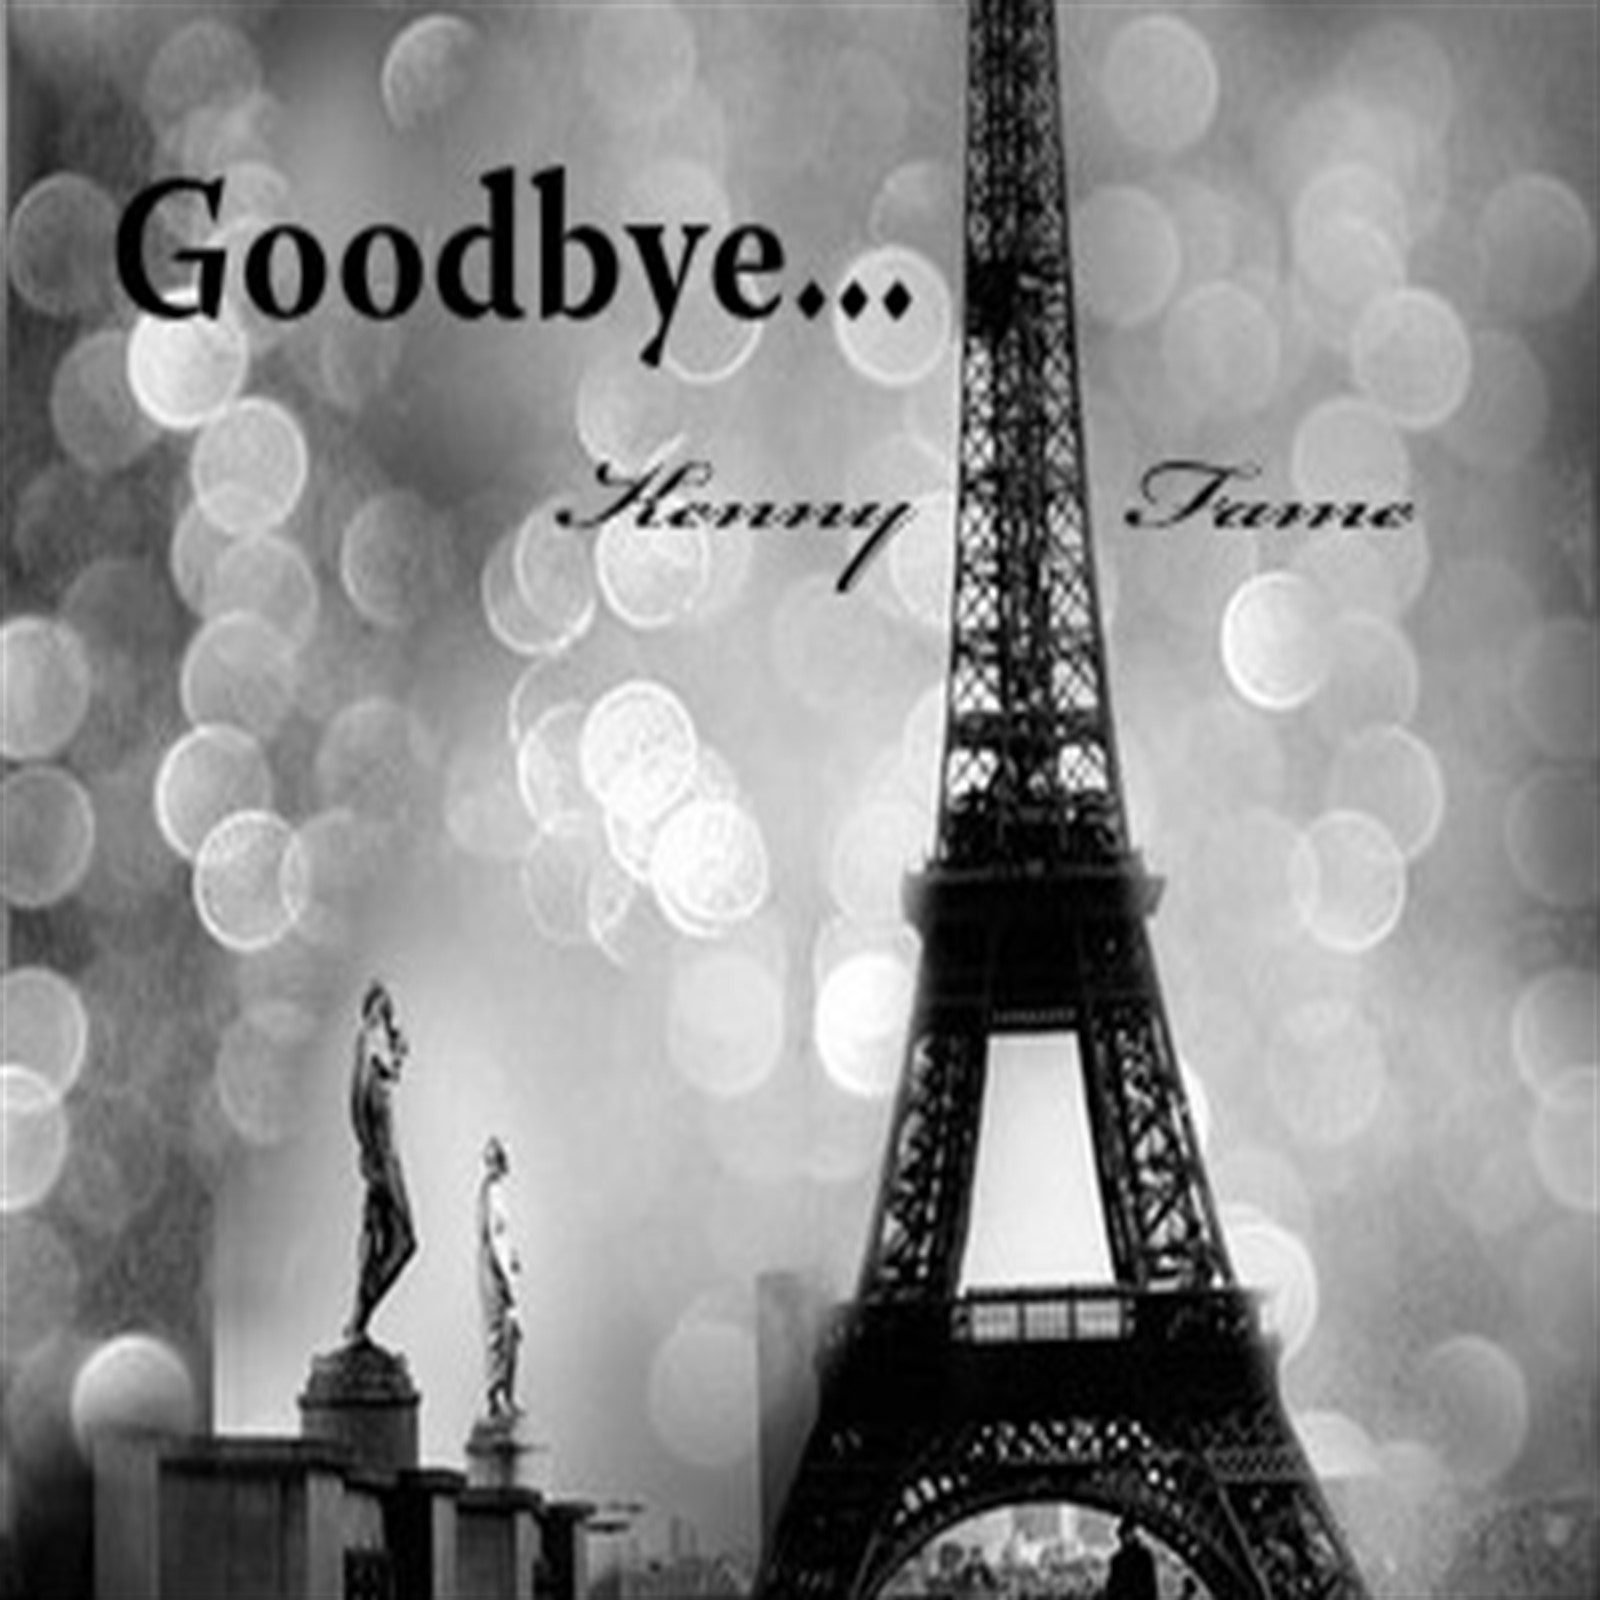  Kenny Fame – “Goodbye…”